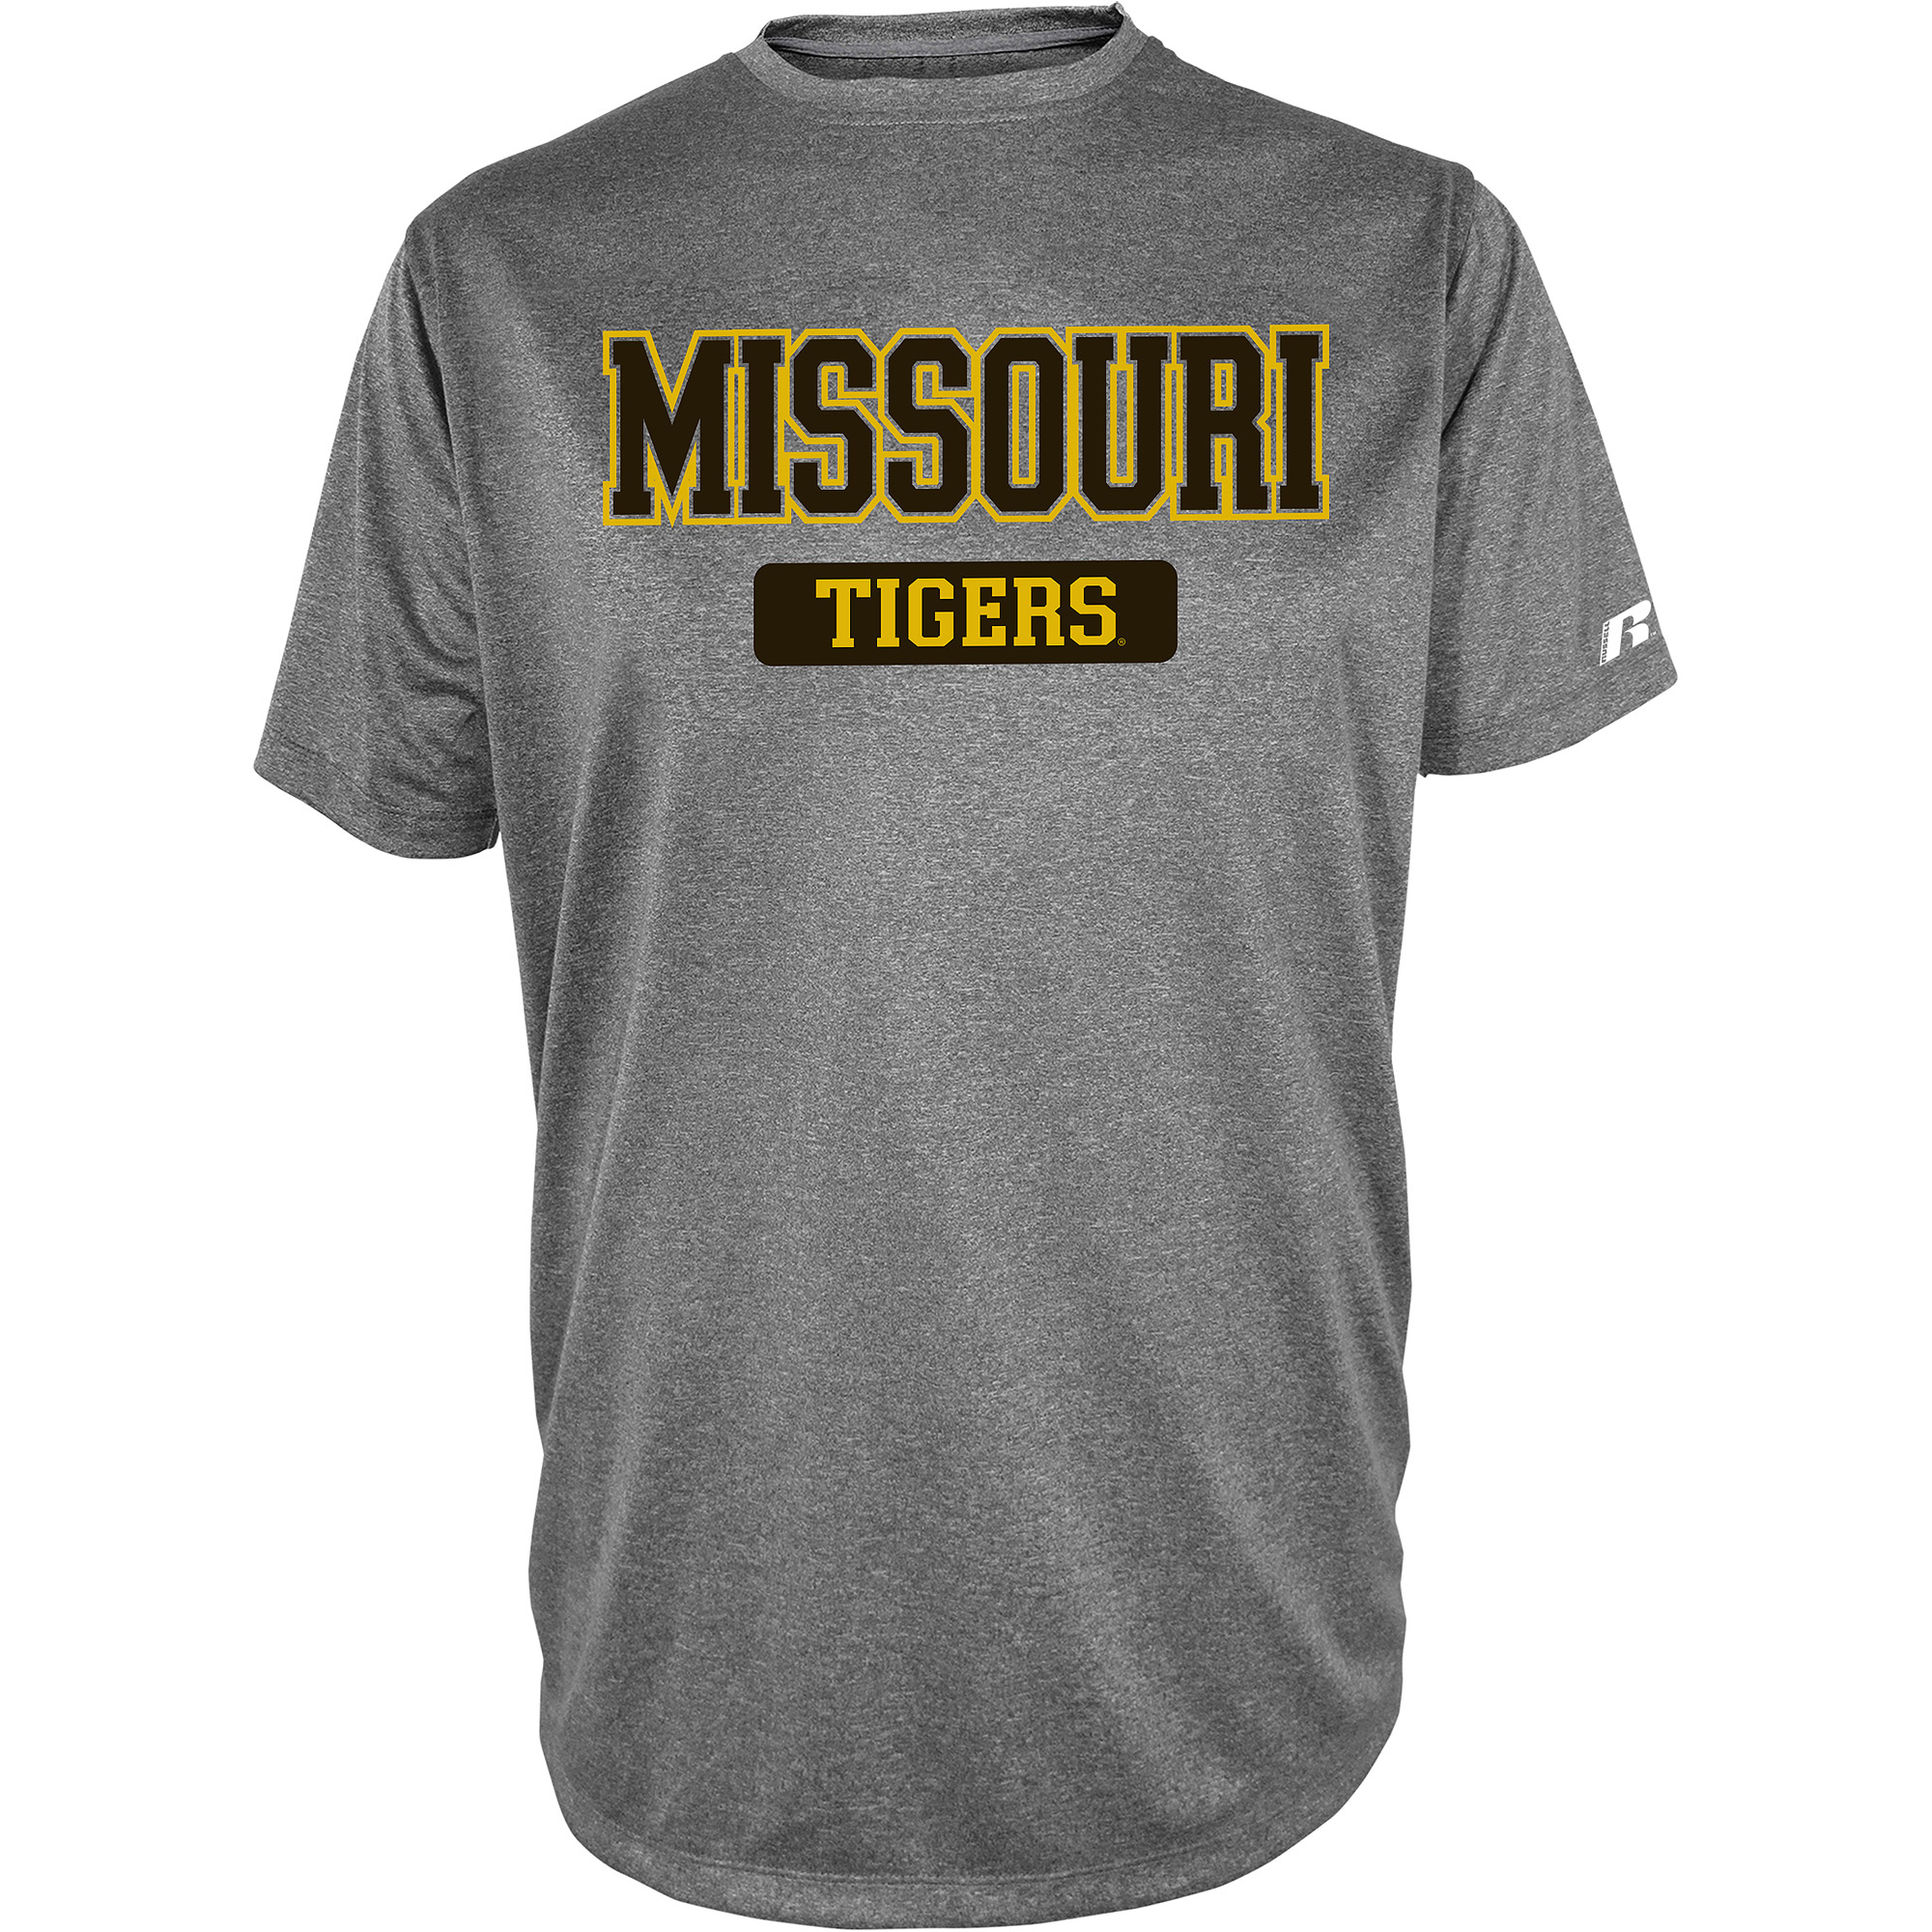  Russell NCAA Missouri Tigers, Men's Impact T-Shirt